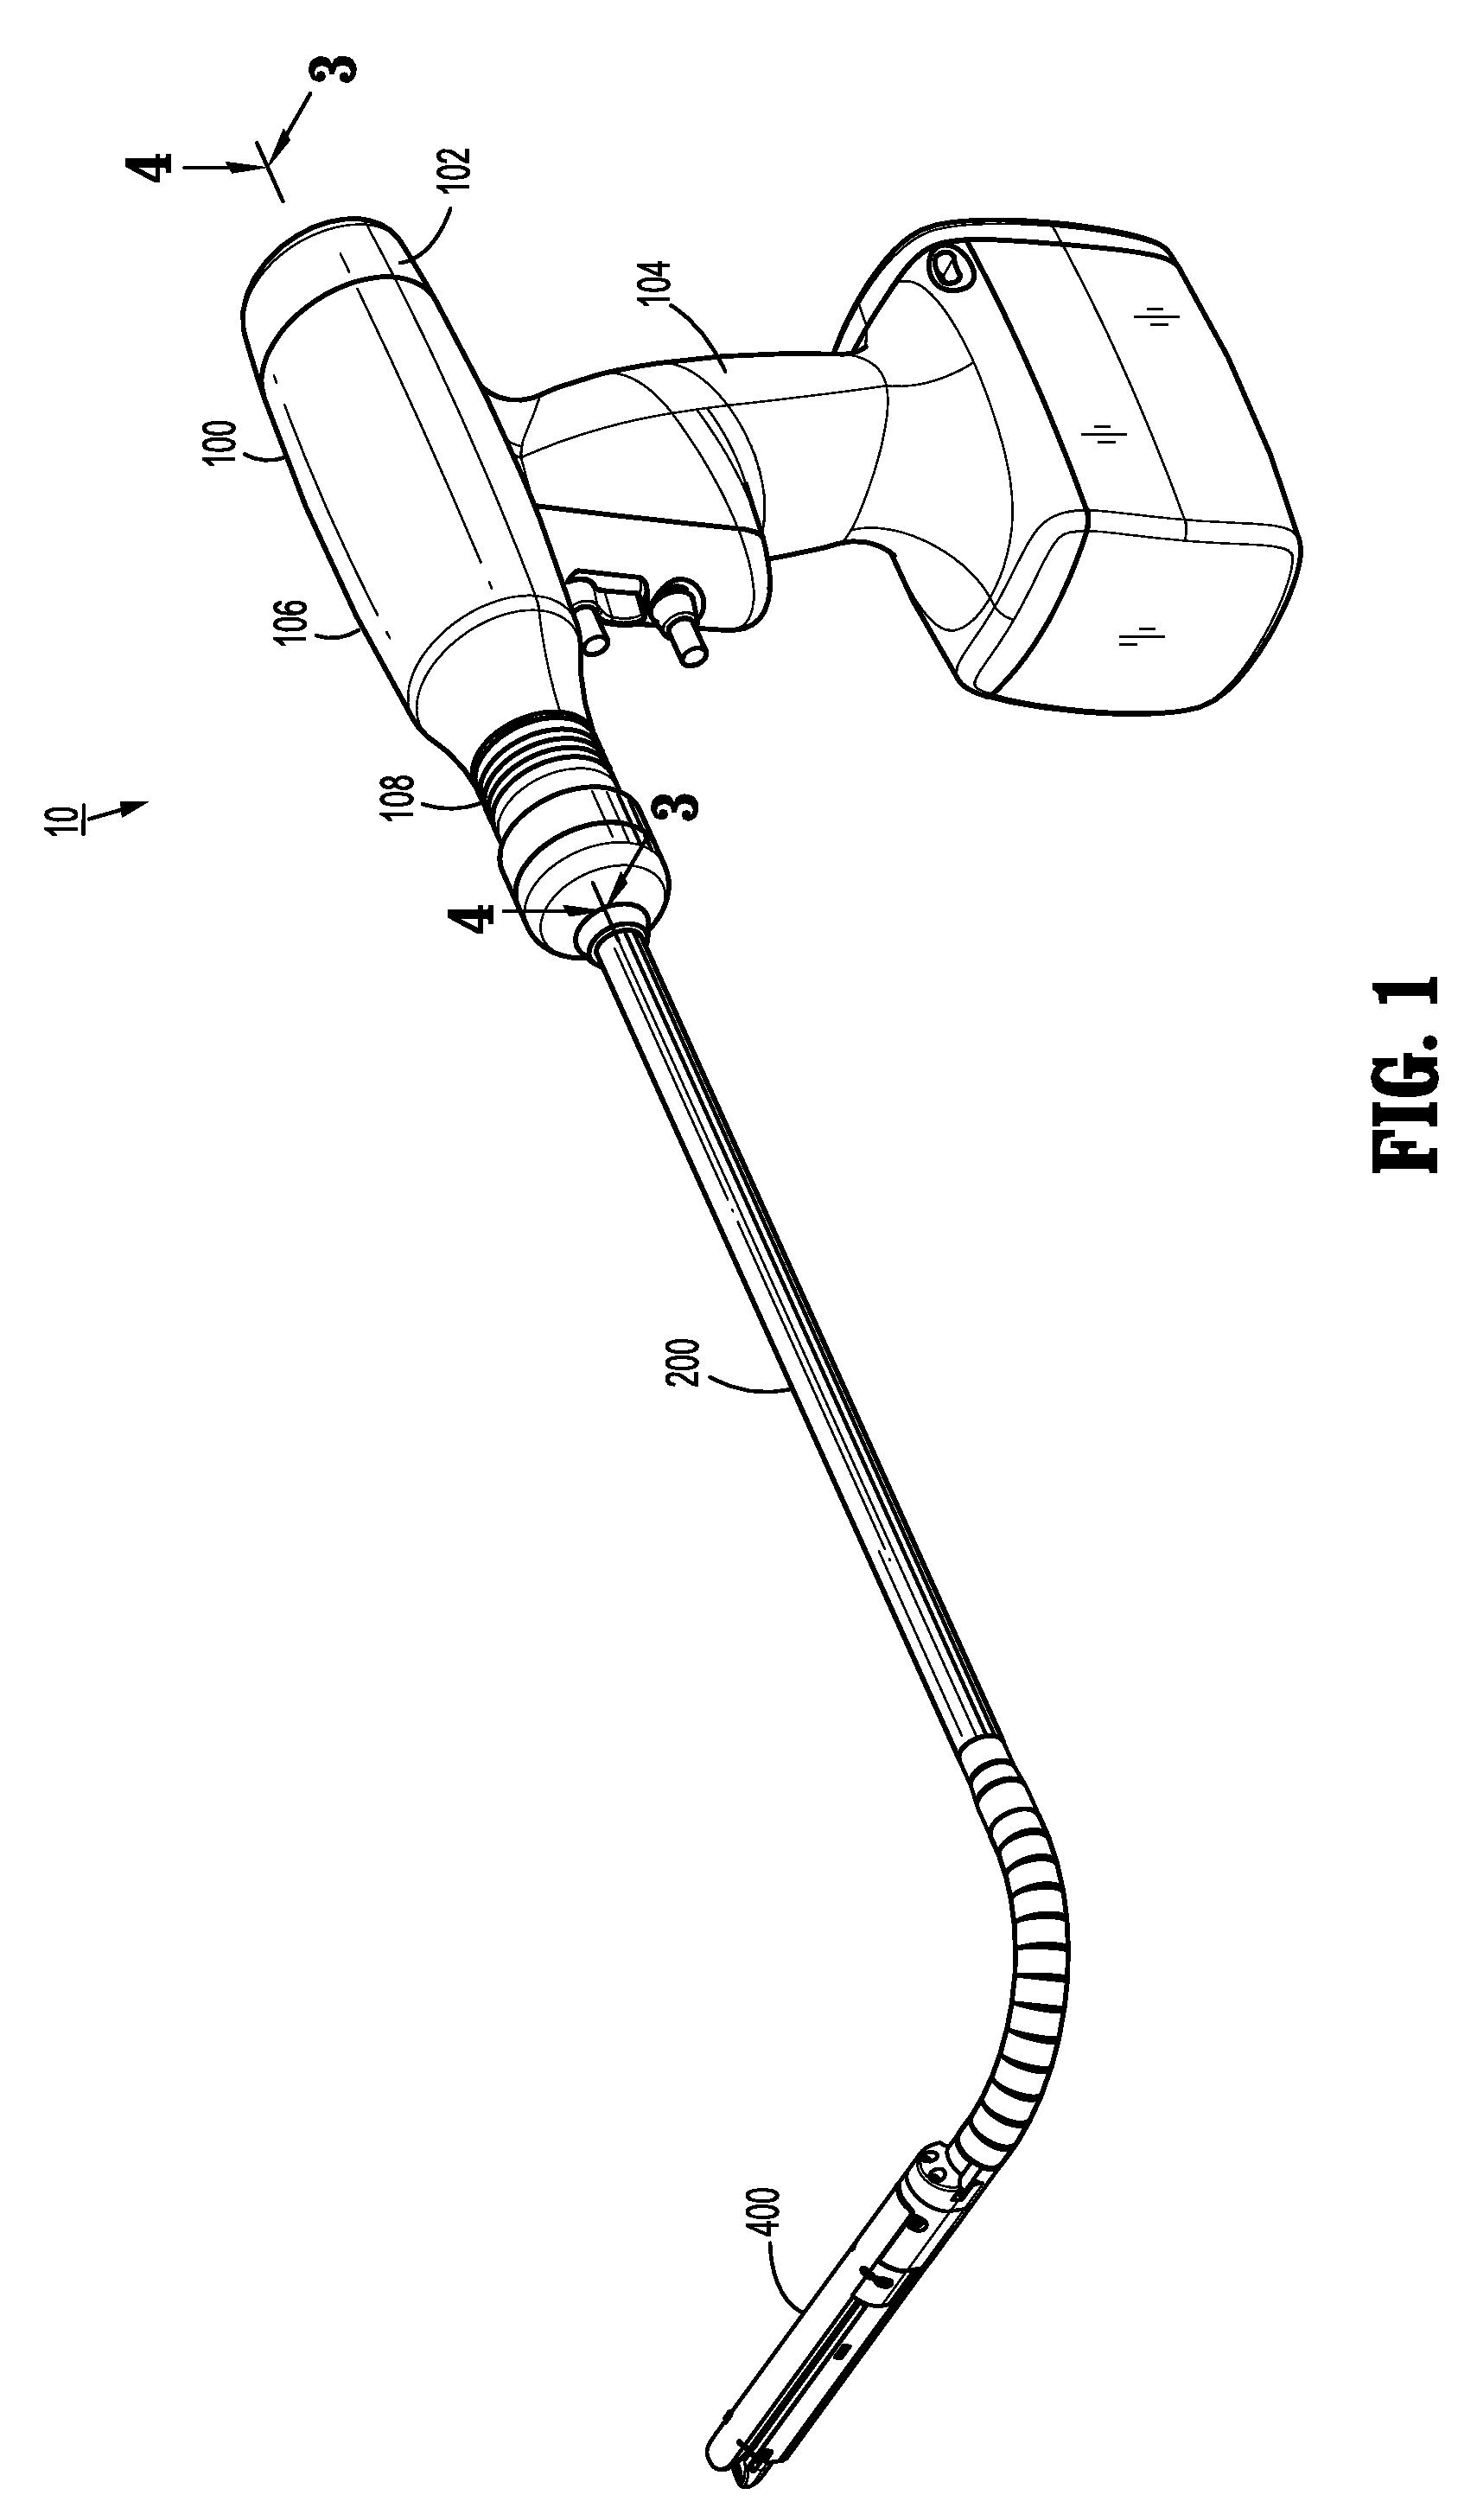 Apparatus for endoscopic procedures